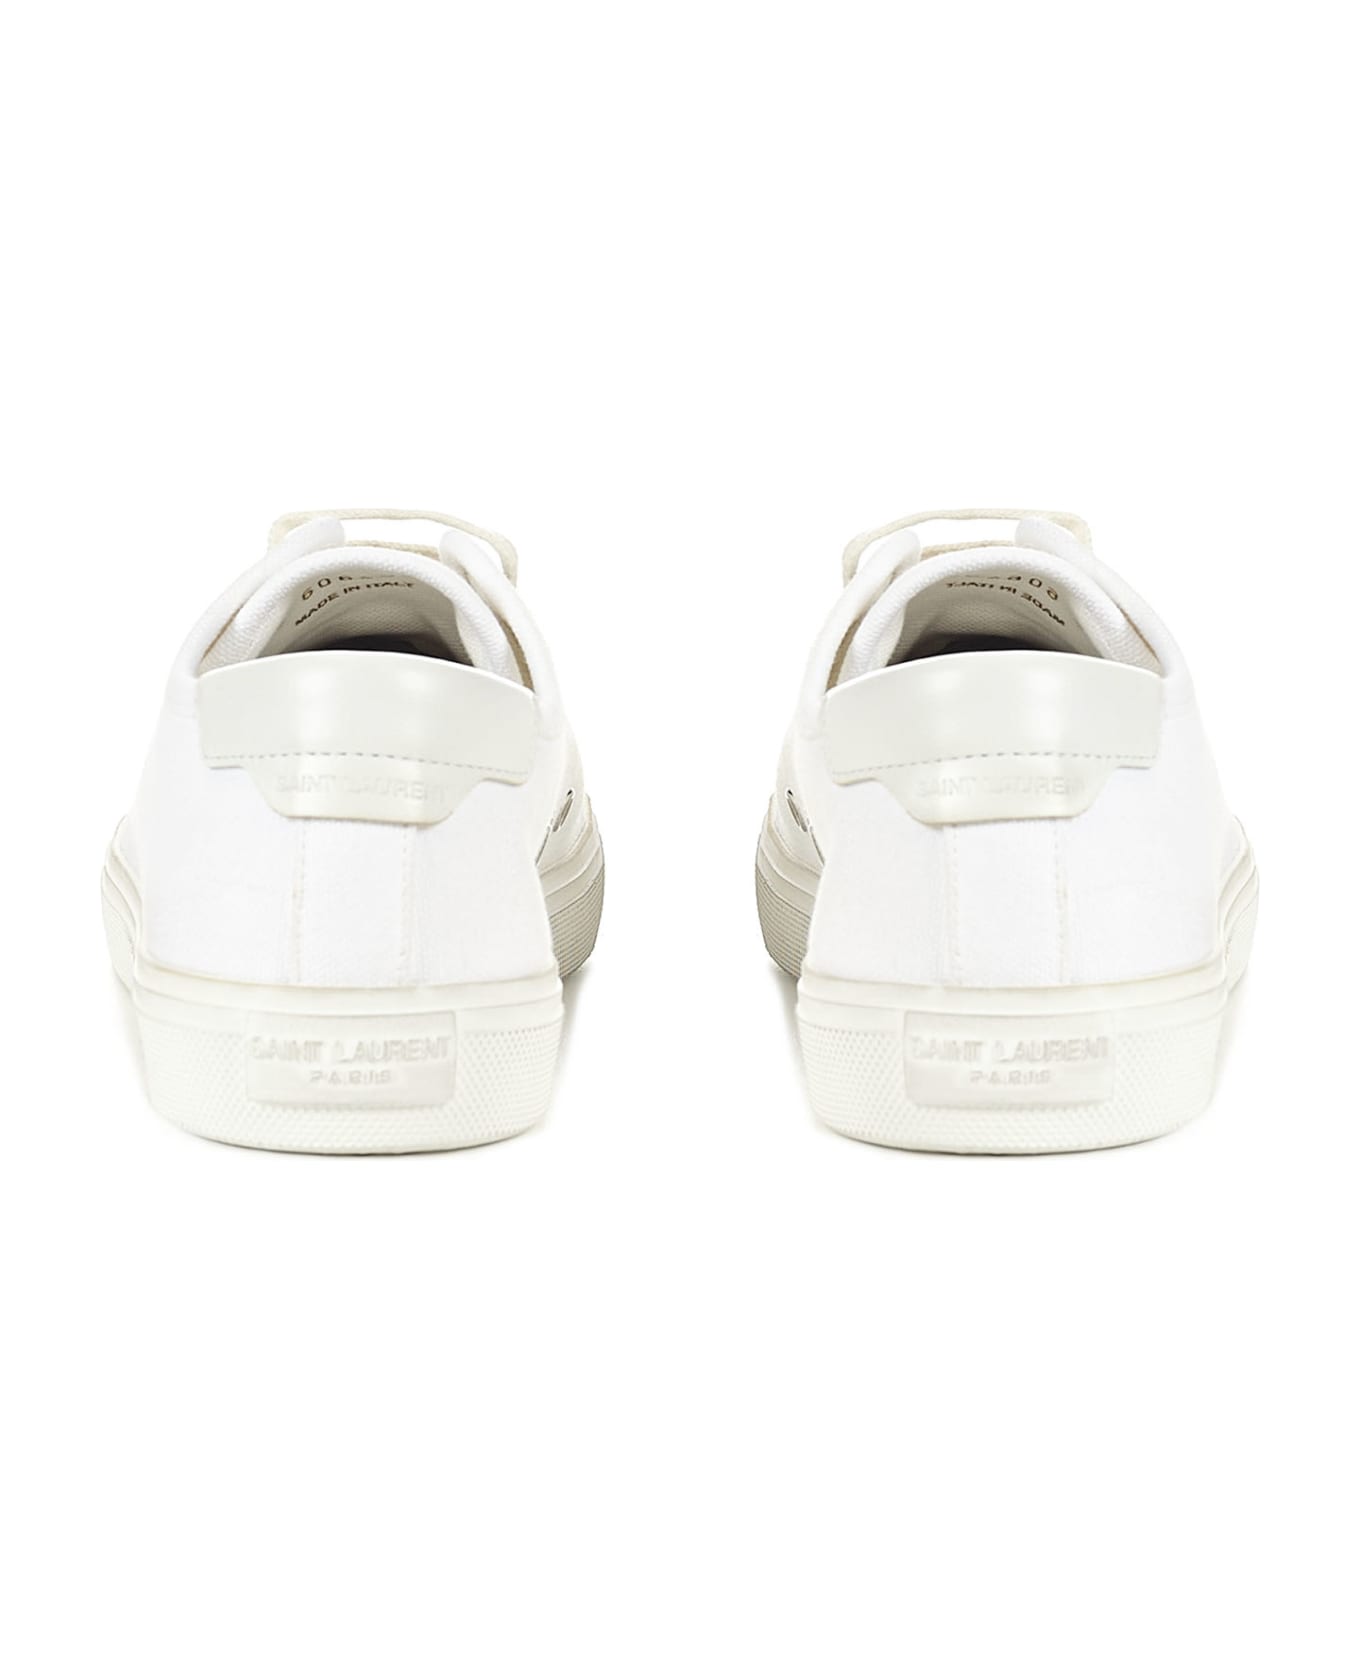 Saint Laurent Malibu Sneakers - White